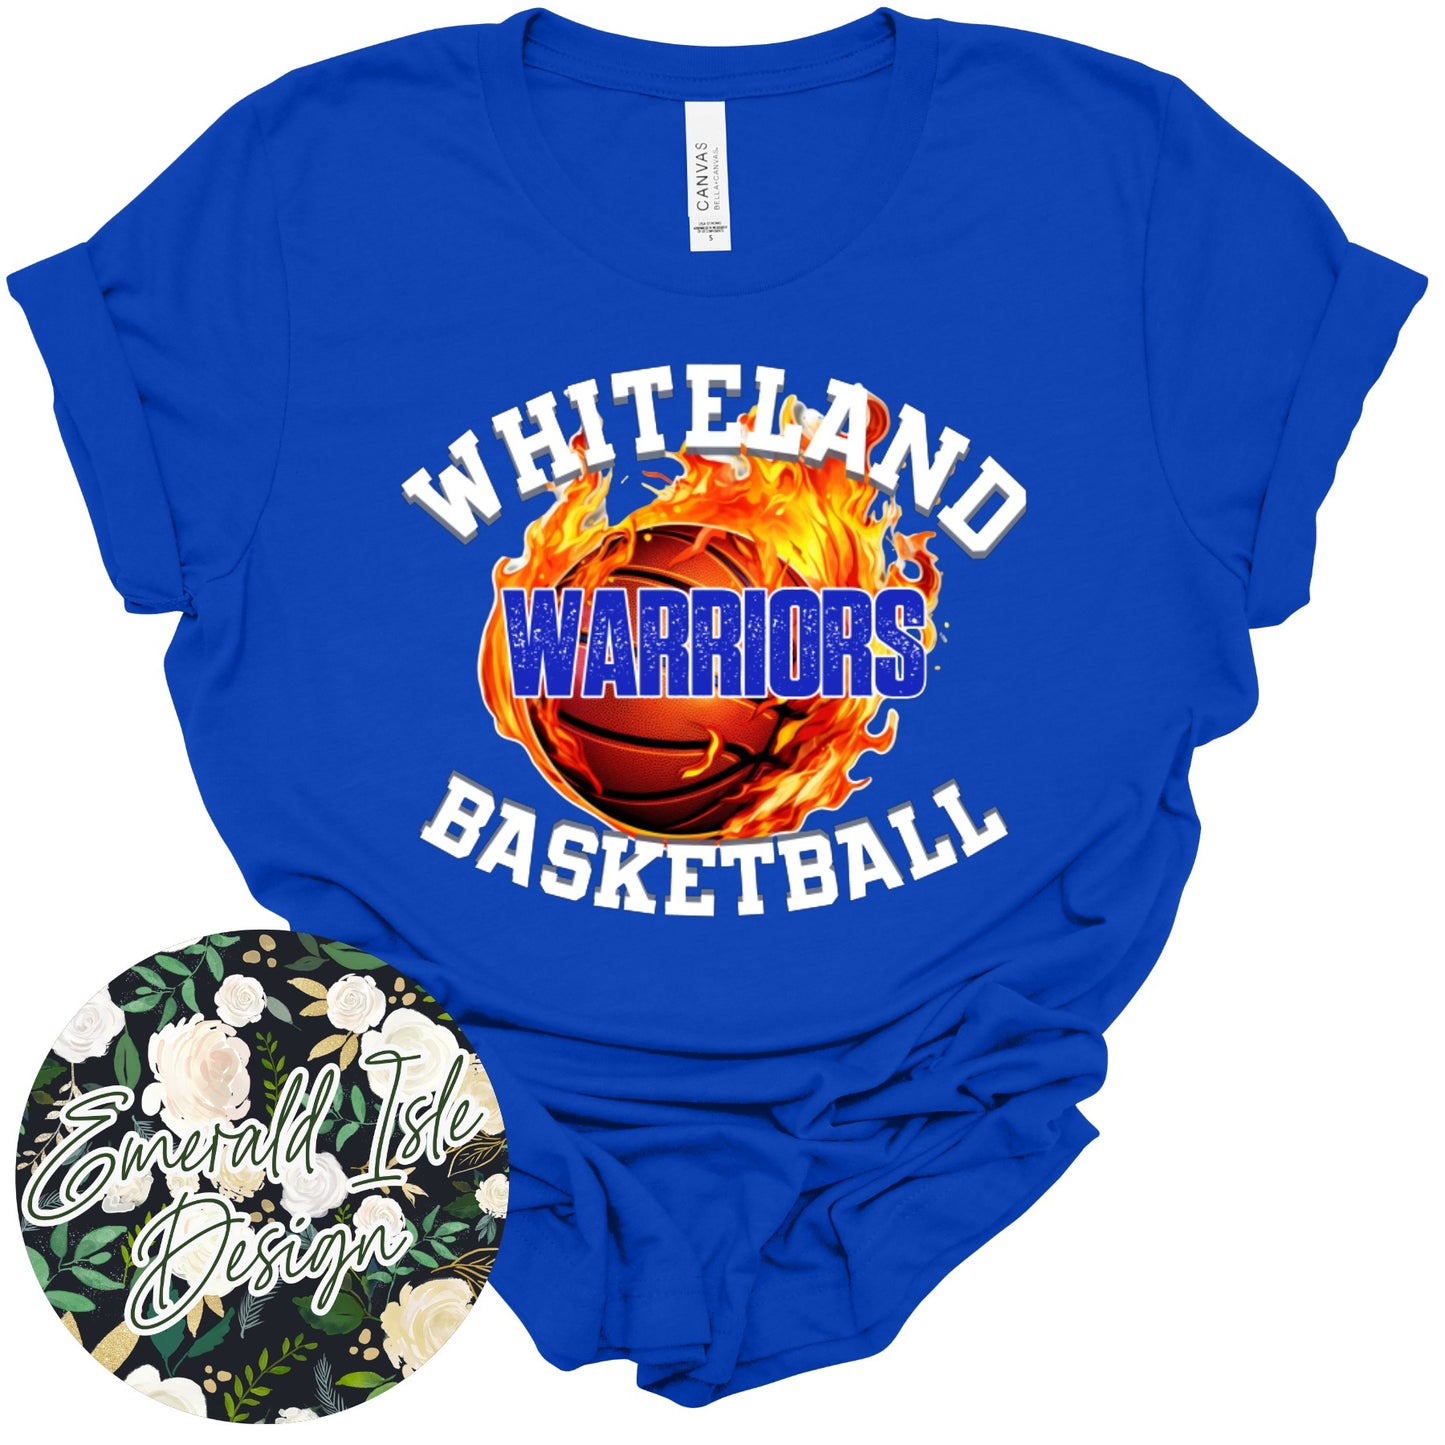 Whiteland Warriors Fire Basketball Design